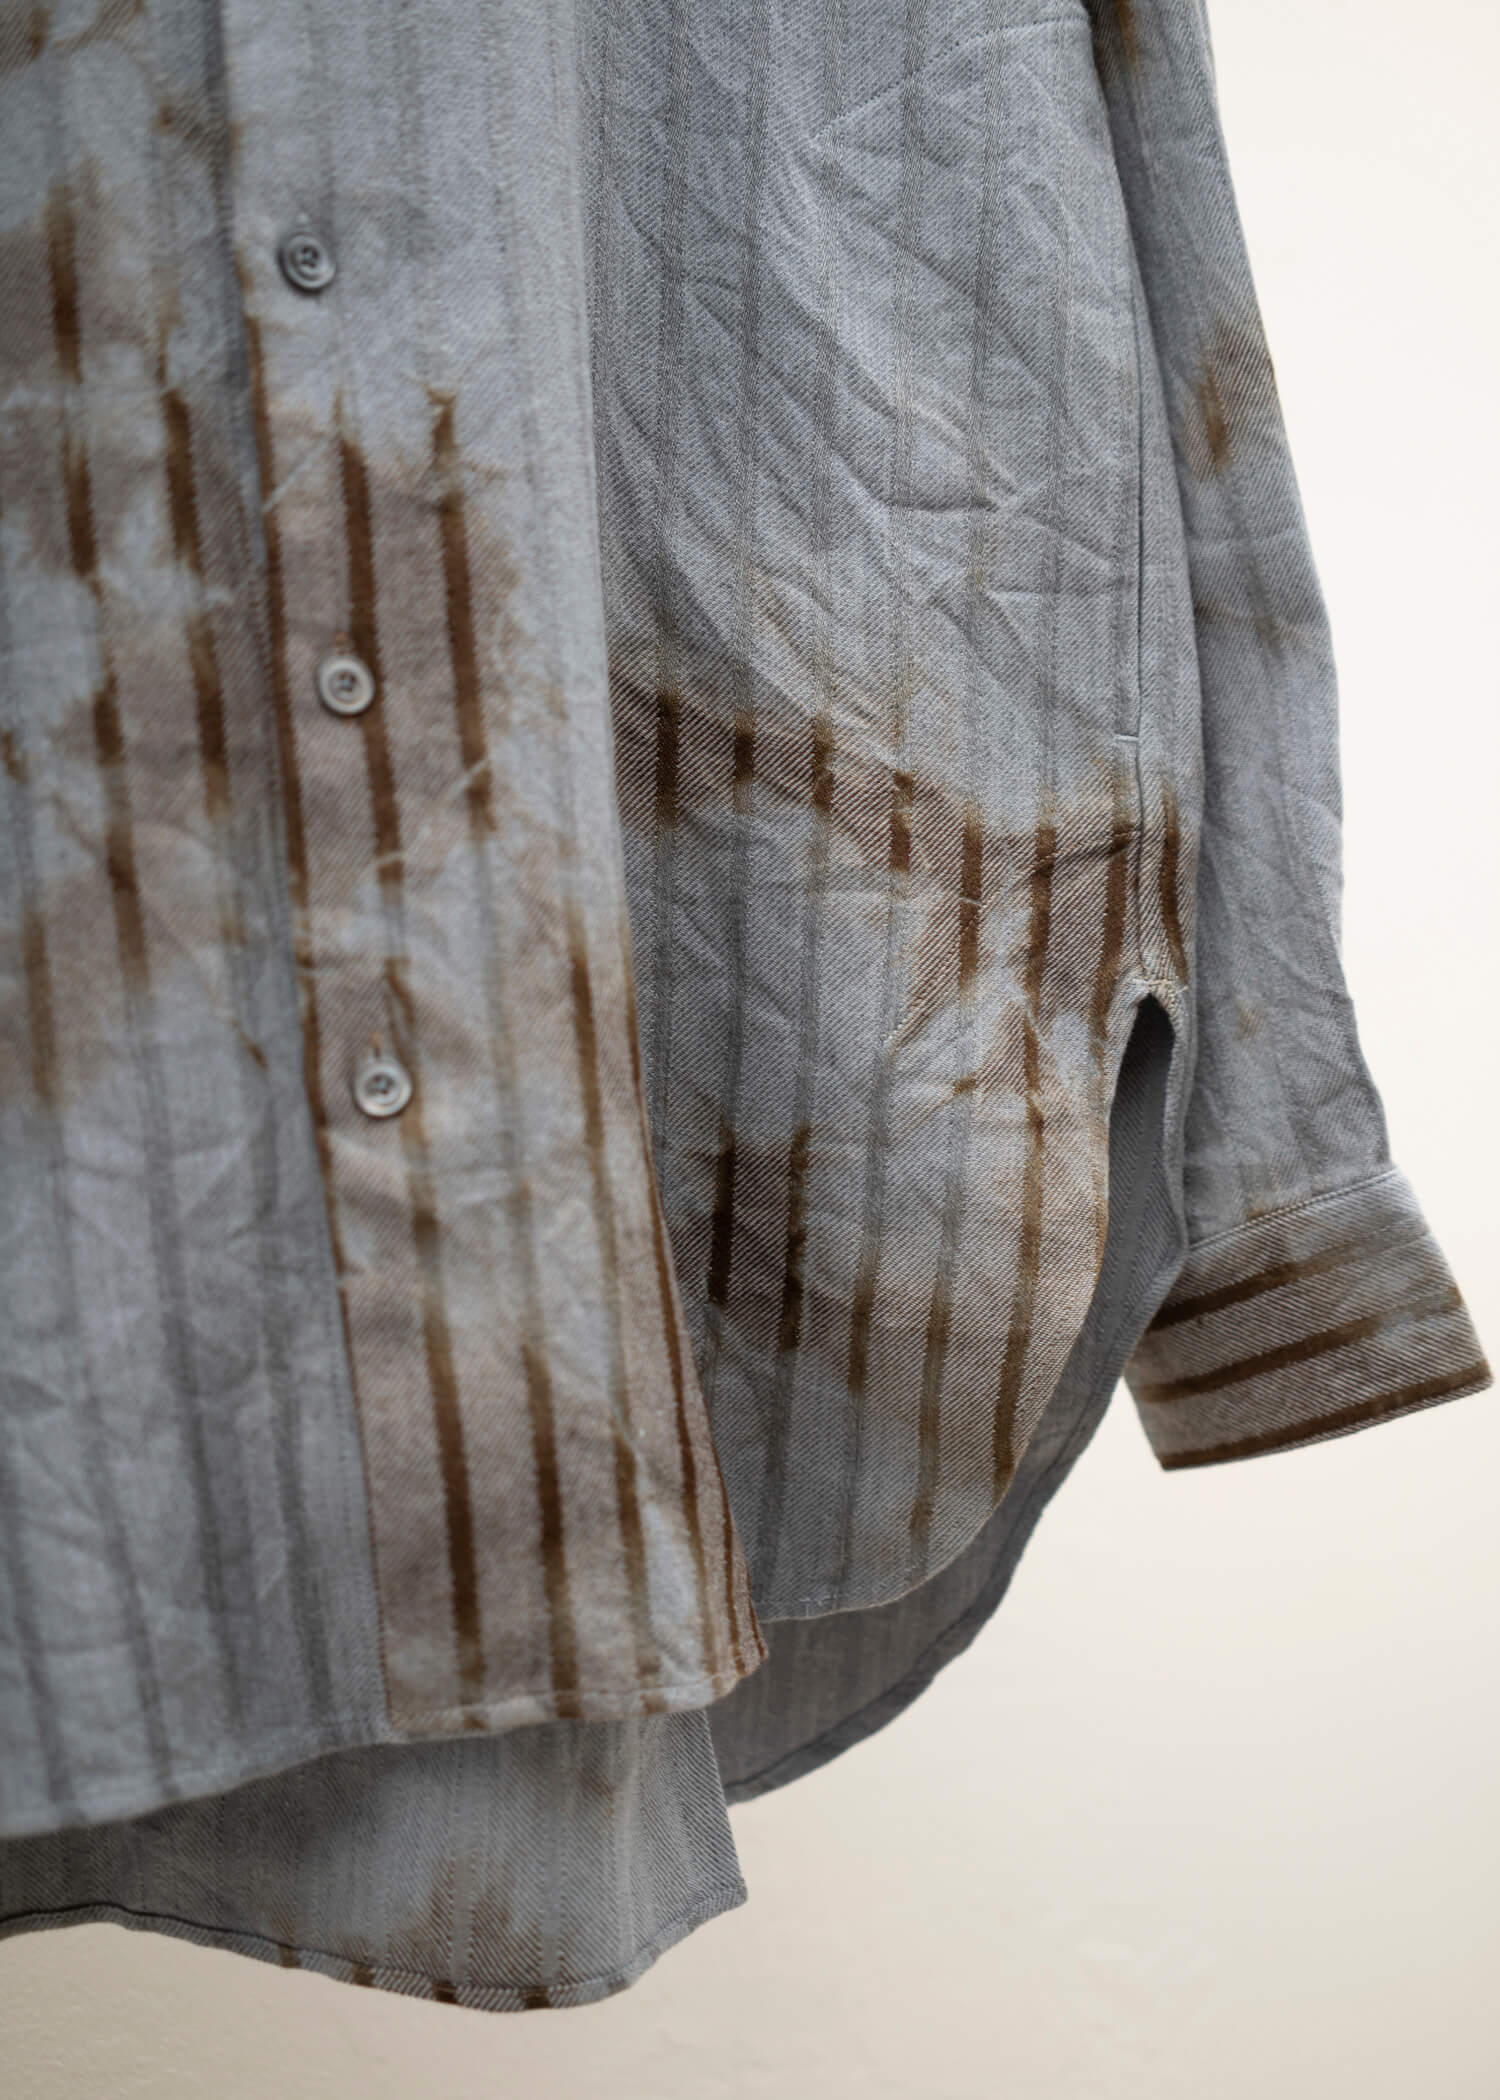 SUZUSAN Wool Cotton Dobby Stripe Shirt(Madara Shibori) Brown - Light Grey